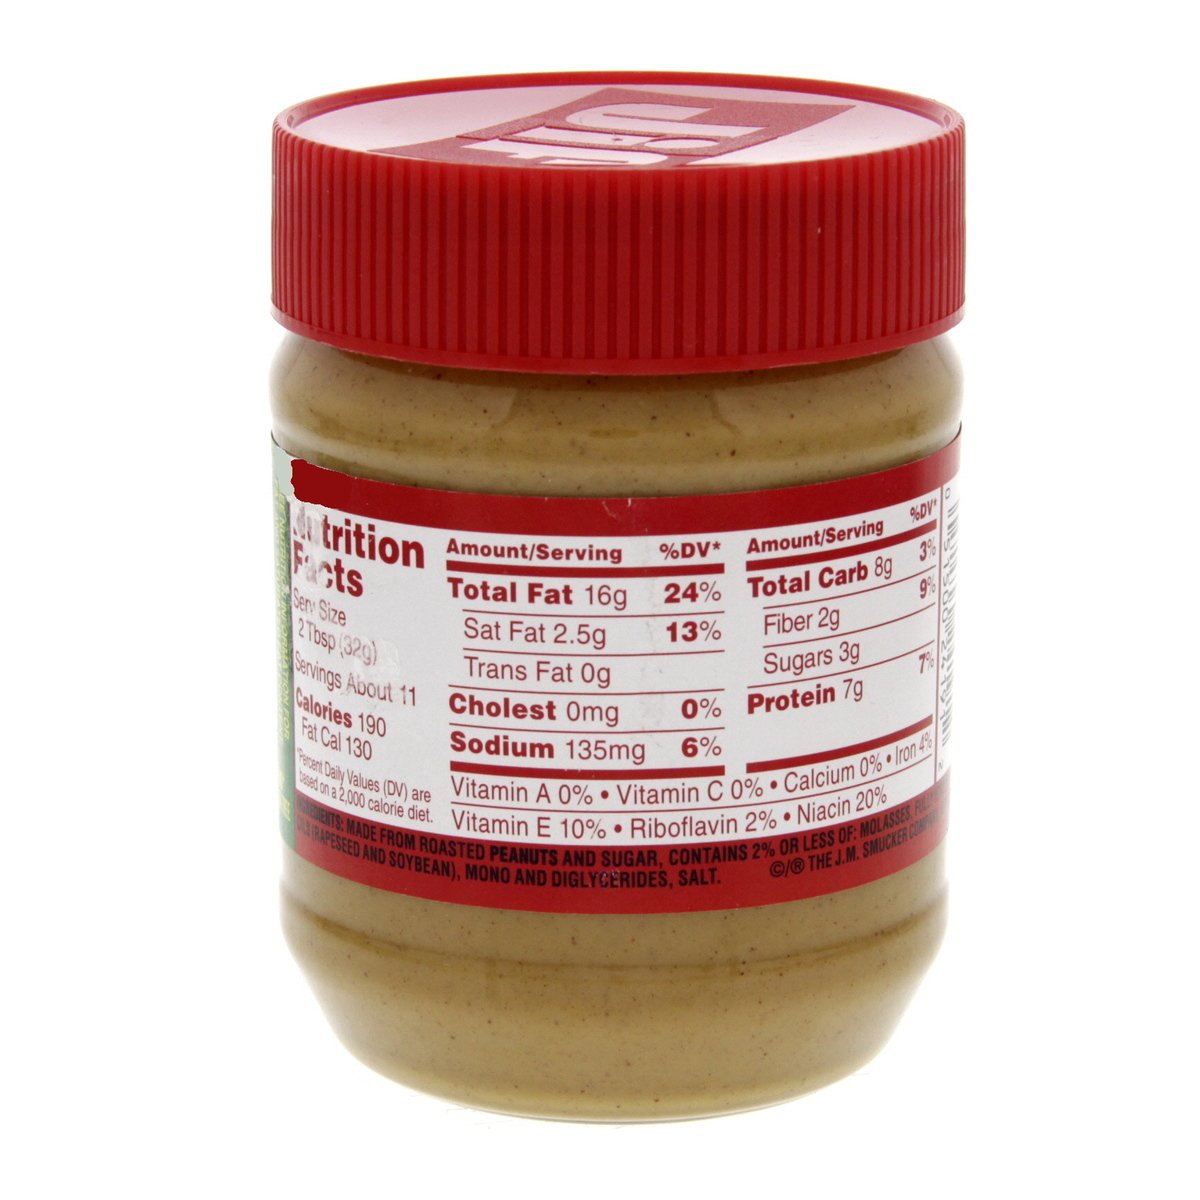 Jif Creamy Peanut Butter 340 g